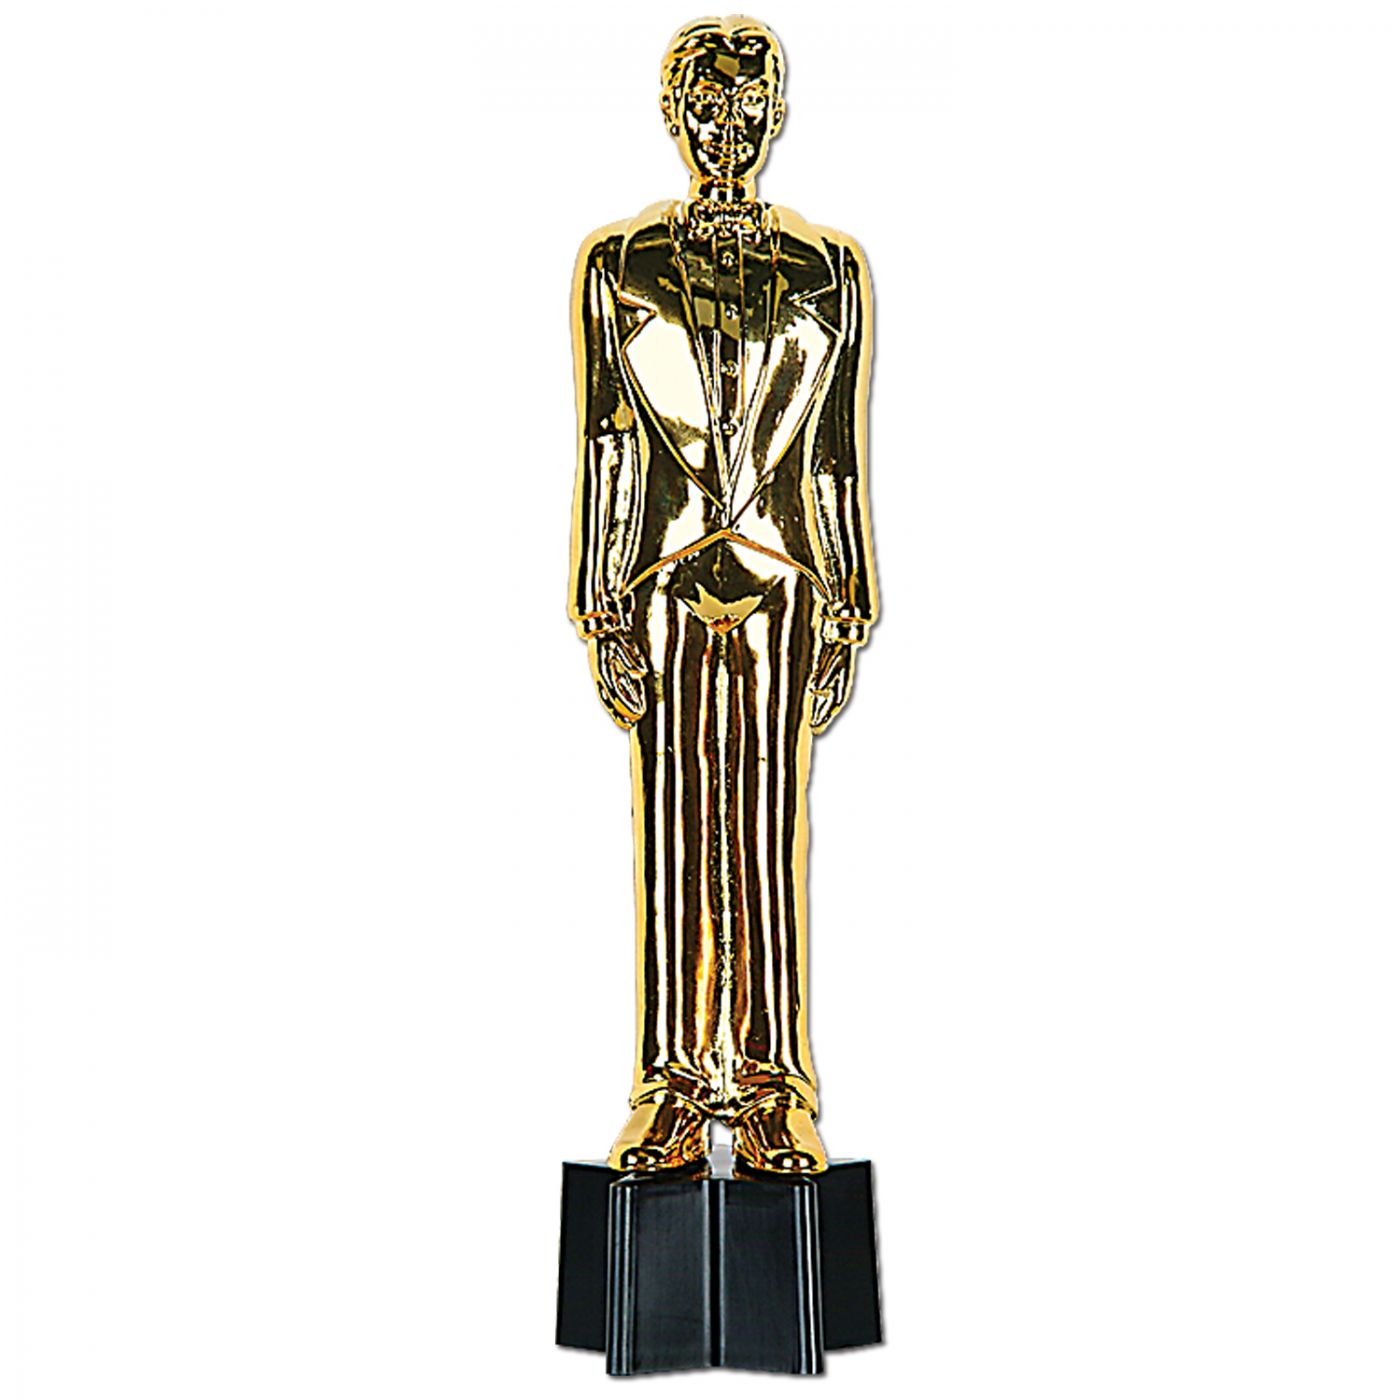 Awards Night Male Statuette (6) image